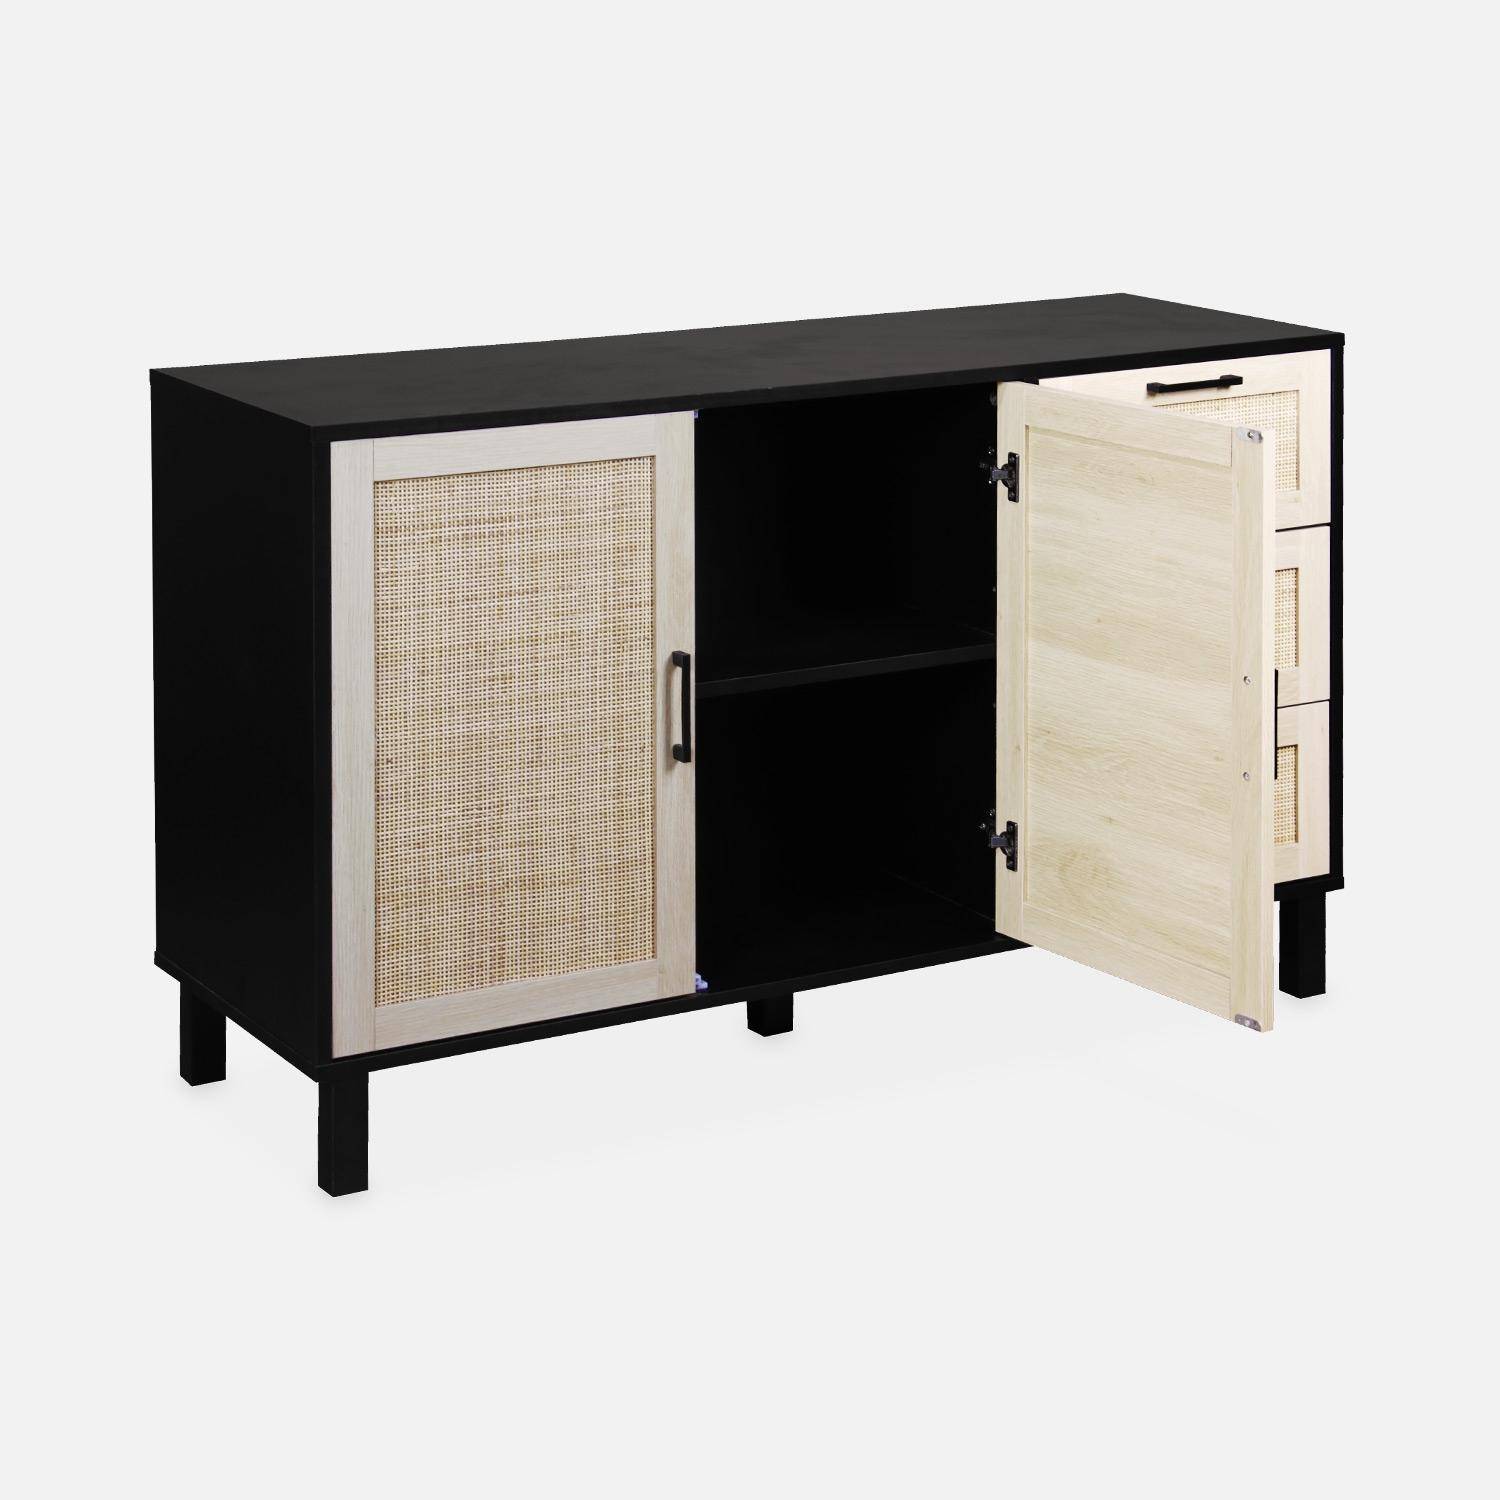 Black and cane sideboard 120 x 40 x 75cm - Bianca - 3 drawers, 2 doors, 2 levels, 1 shelf Photo6